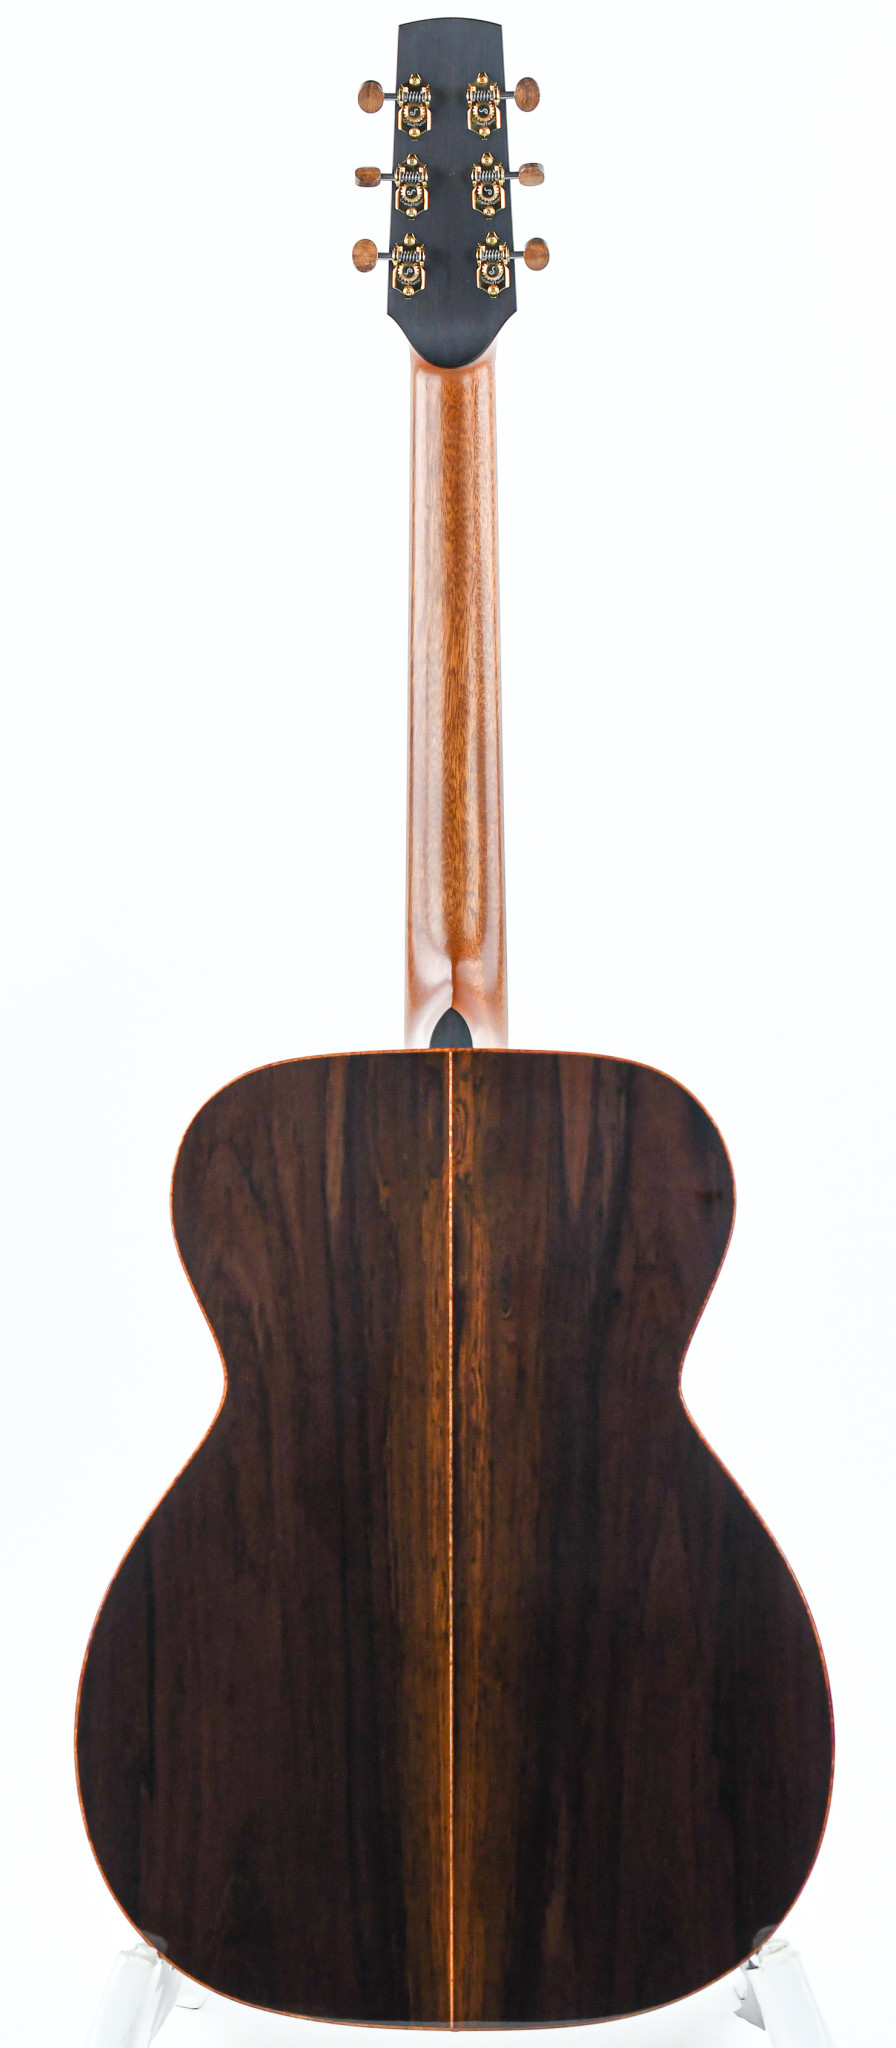 Art Deco Inspired Ltd Edition McNally Guitars - McNally Guitars